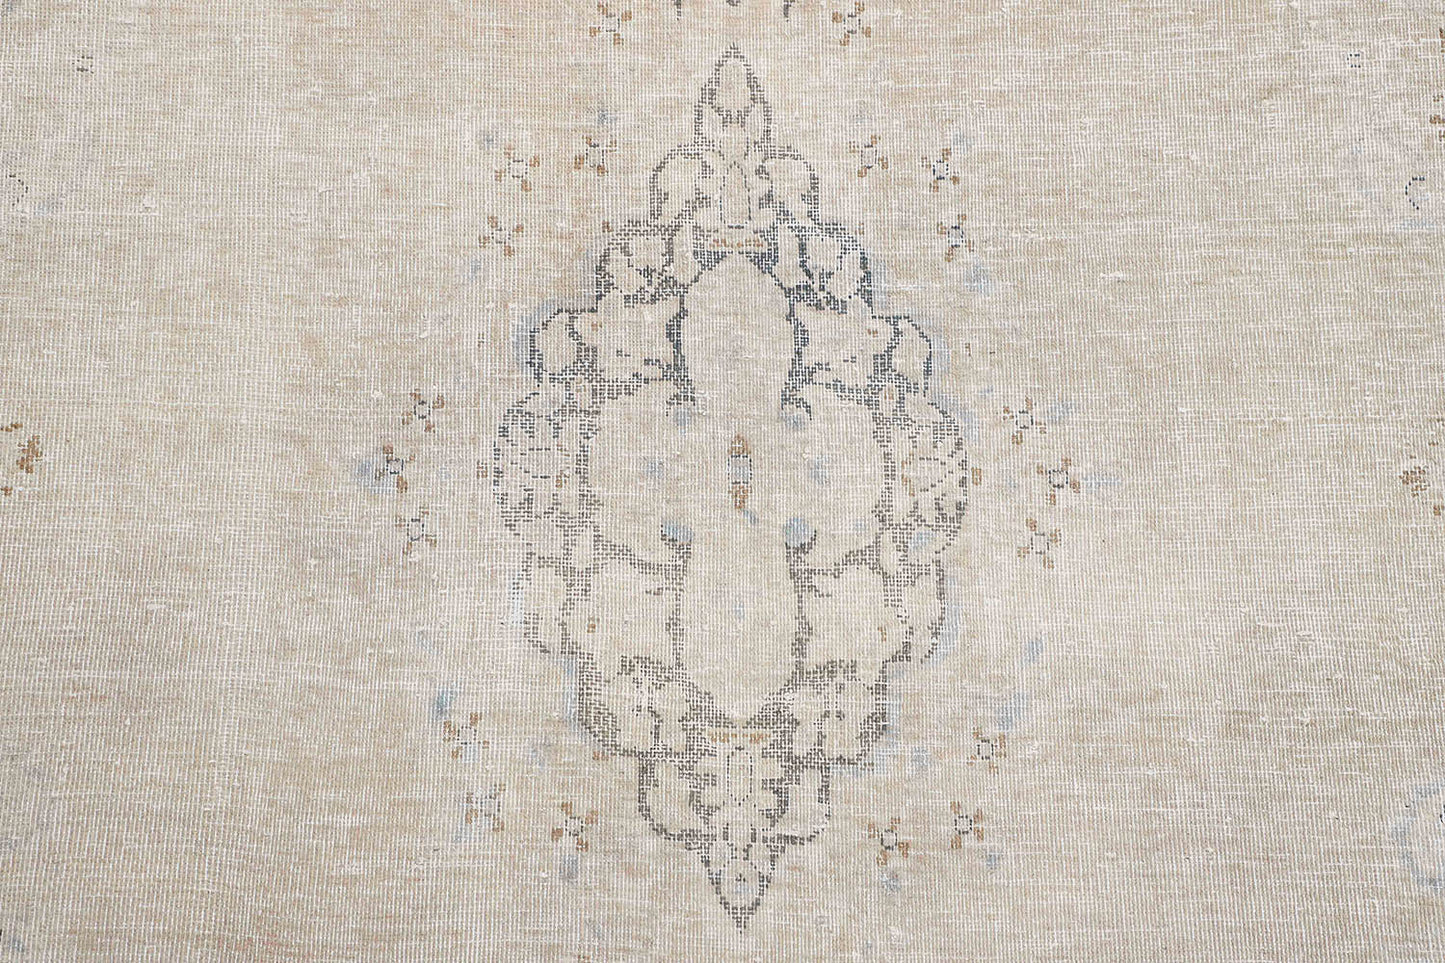 Hand-Knotted Vintage Antique Carpet 4'.7" X 7'.11" Beige Fine Wool Area Rug 5x8